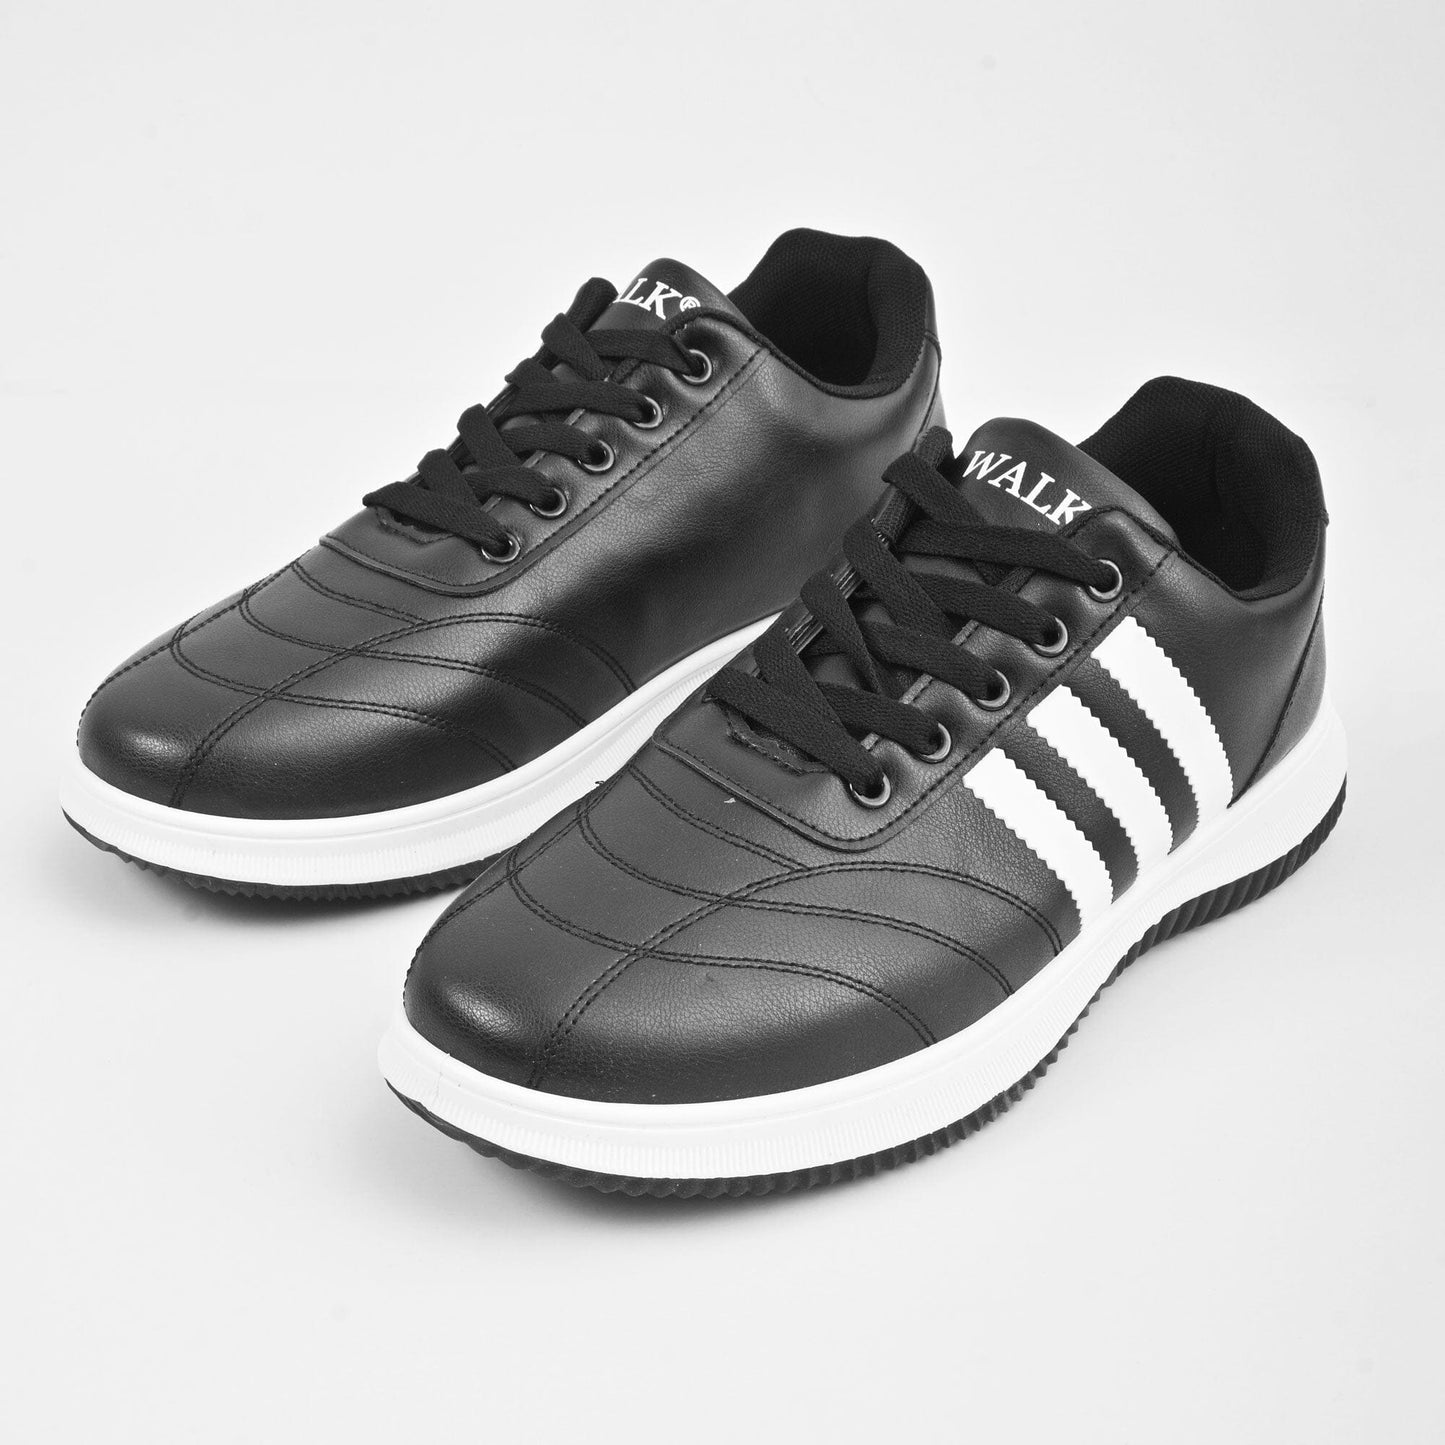 Walk Men's Contrast Stripes Style Sneaker Shoes Men's Shoes Hamza Traders Black & White EUR 39 